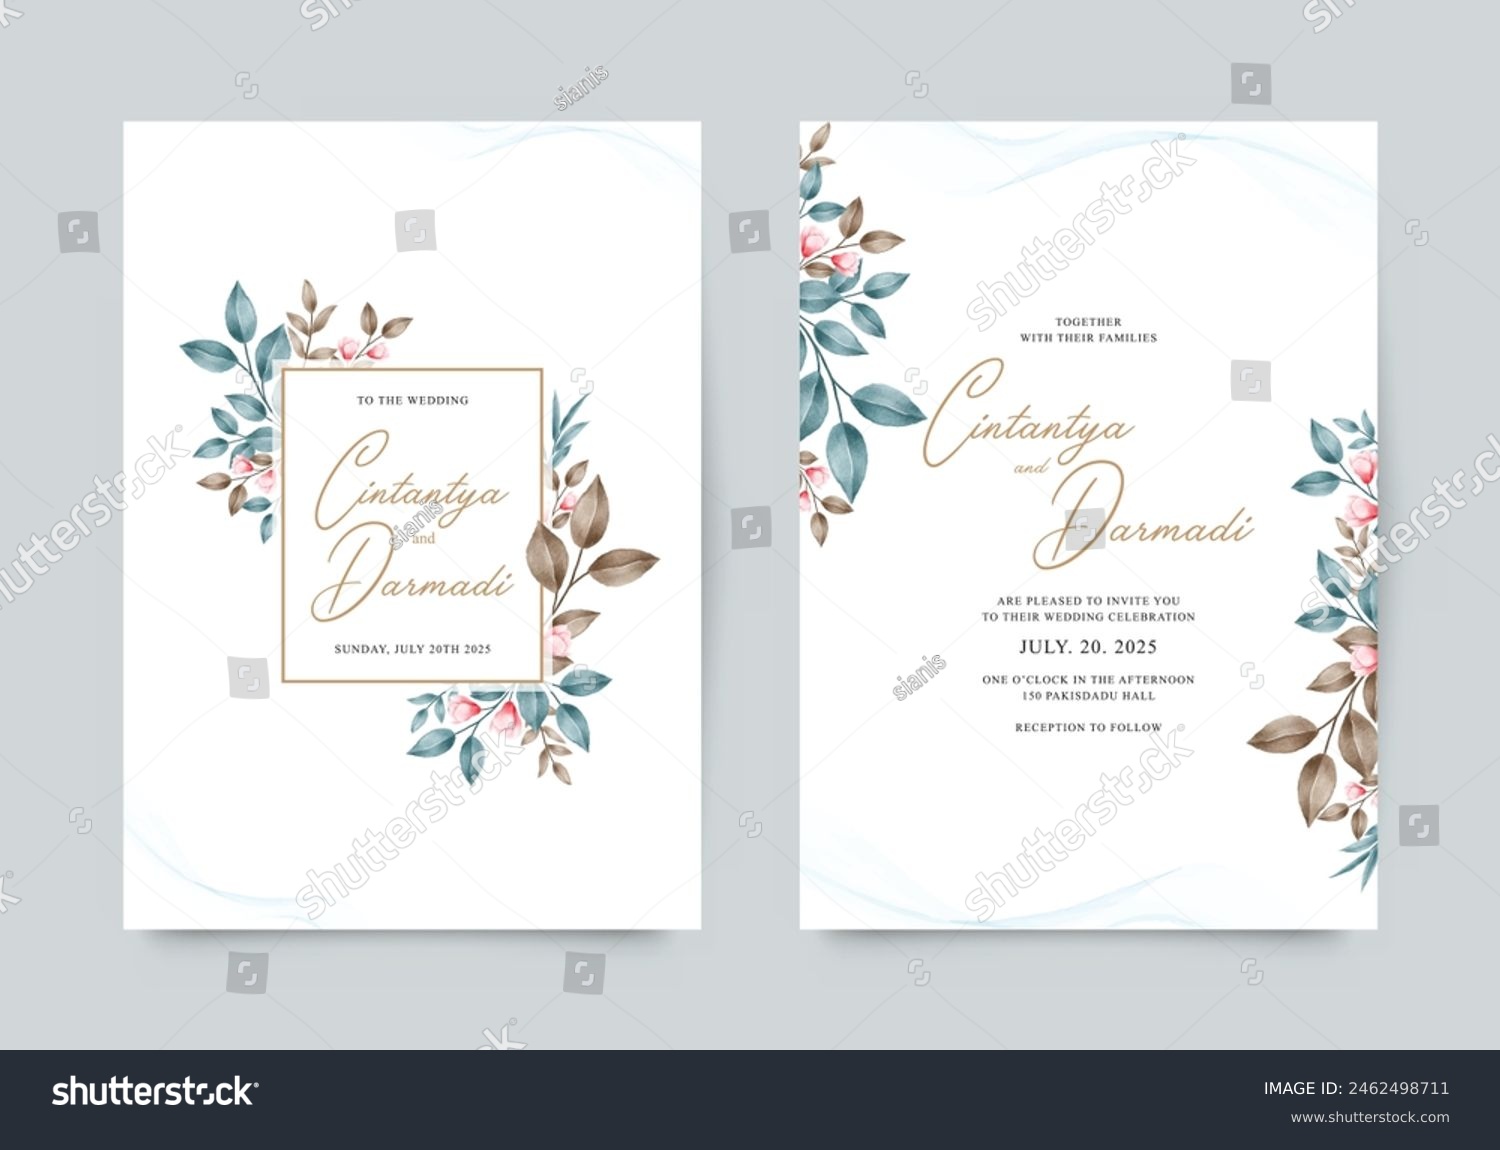 Wedding invitation template with elegant blue leaves decoration